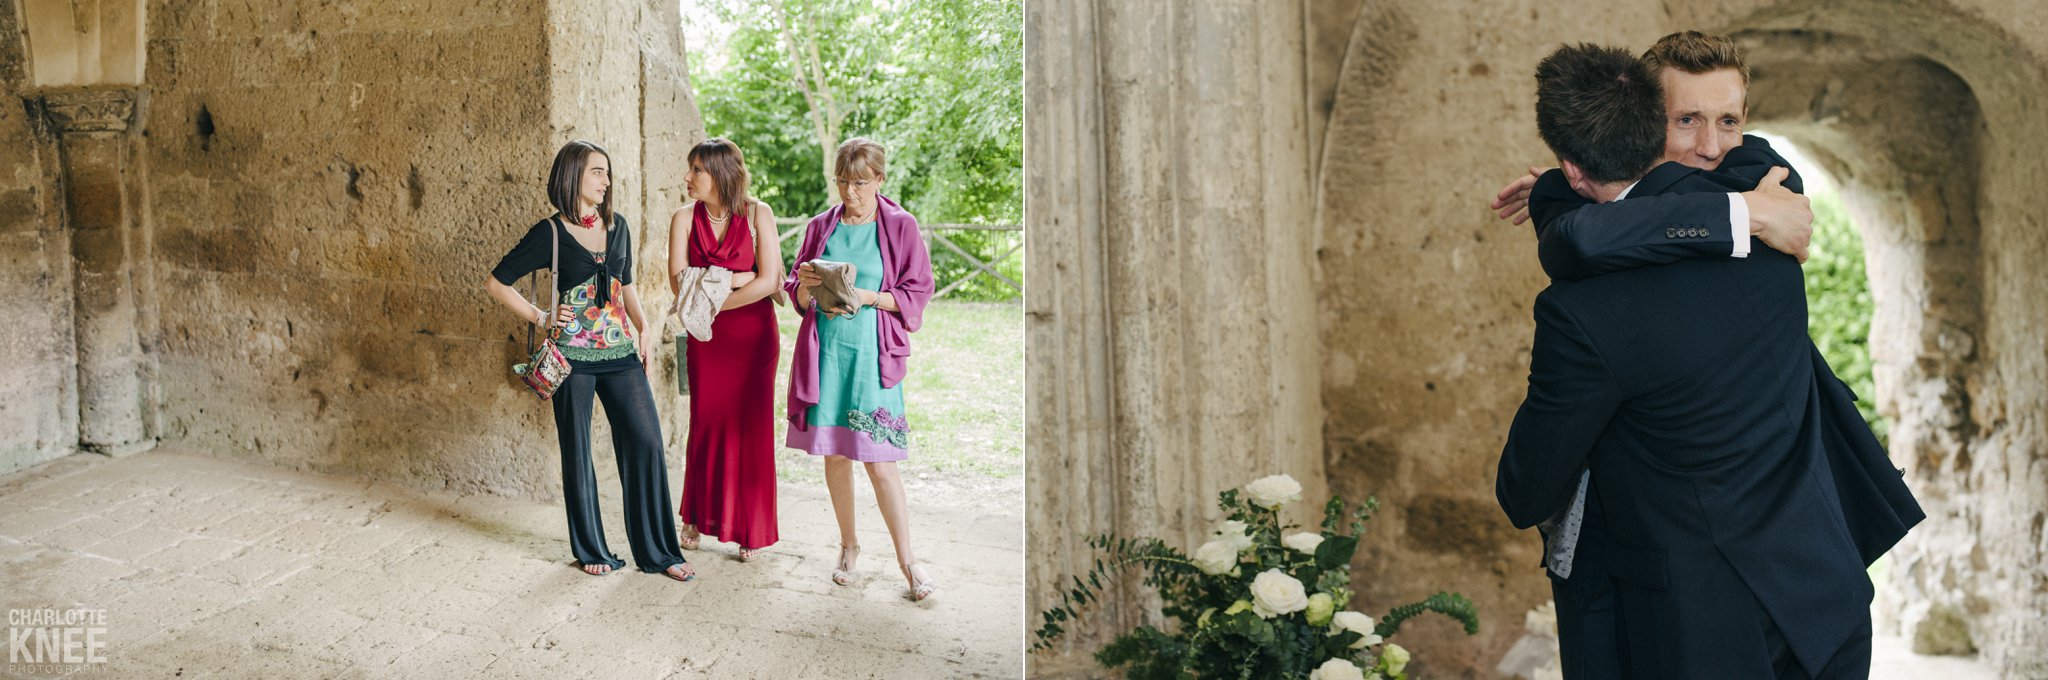 Destination-Wedding-La-Badia-di-Orvieto-Italy-Charlotte-Knee-Photography_0014.jpg